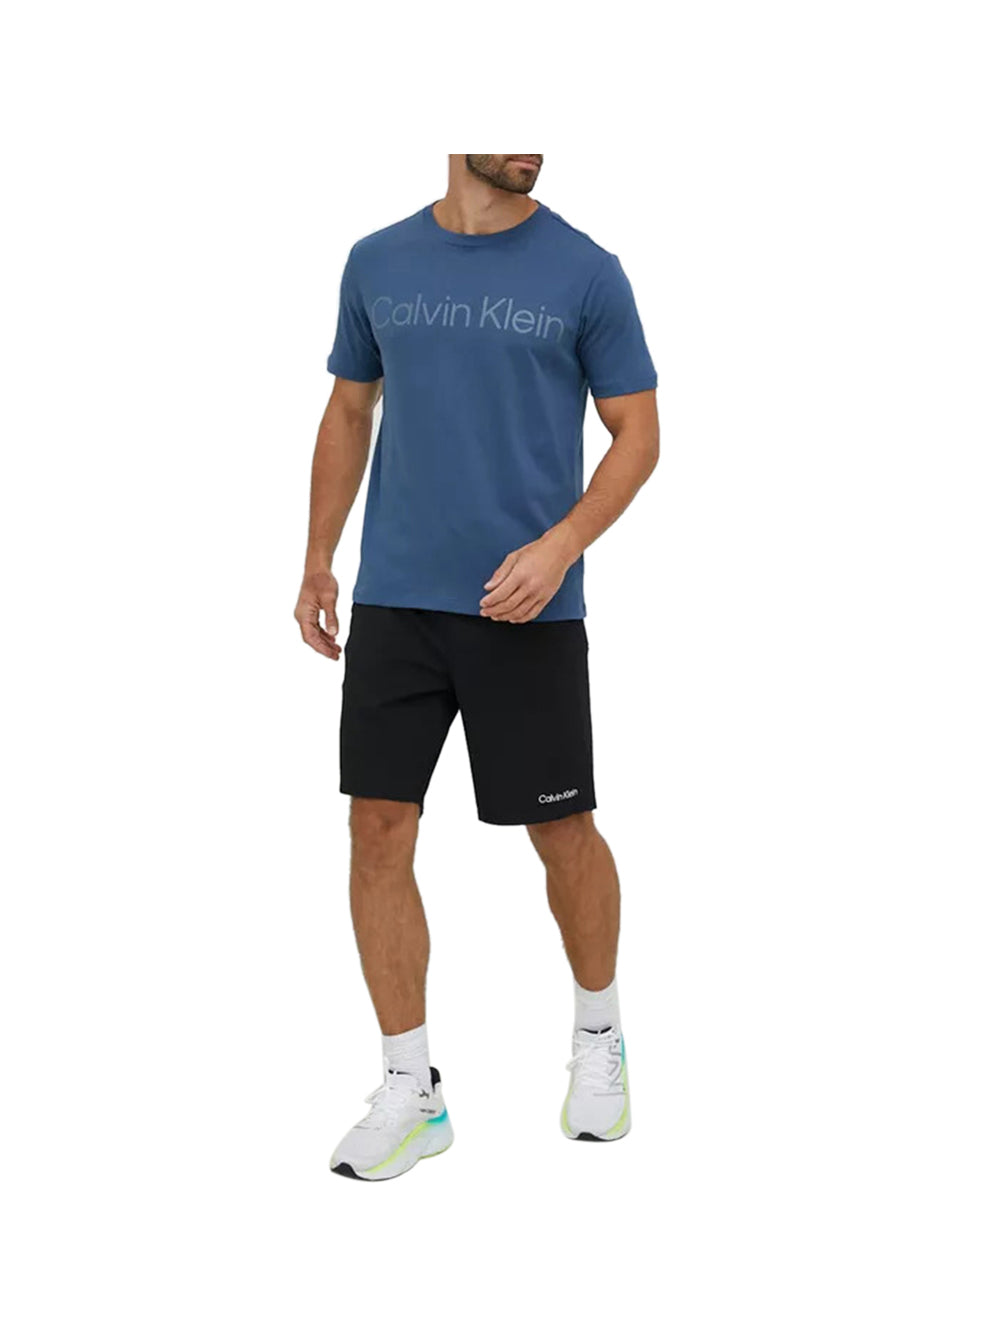 CALVIN SPORT T-shirt Uomo Blu in cotone con maxi logo Blu